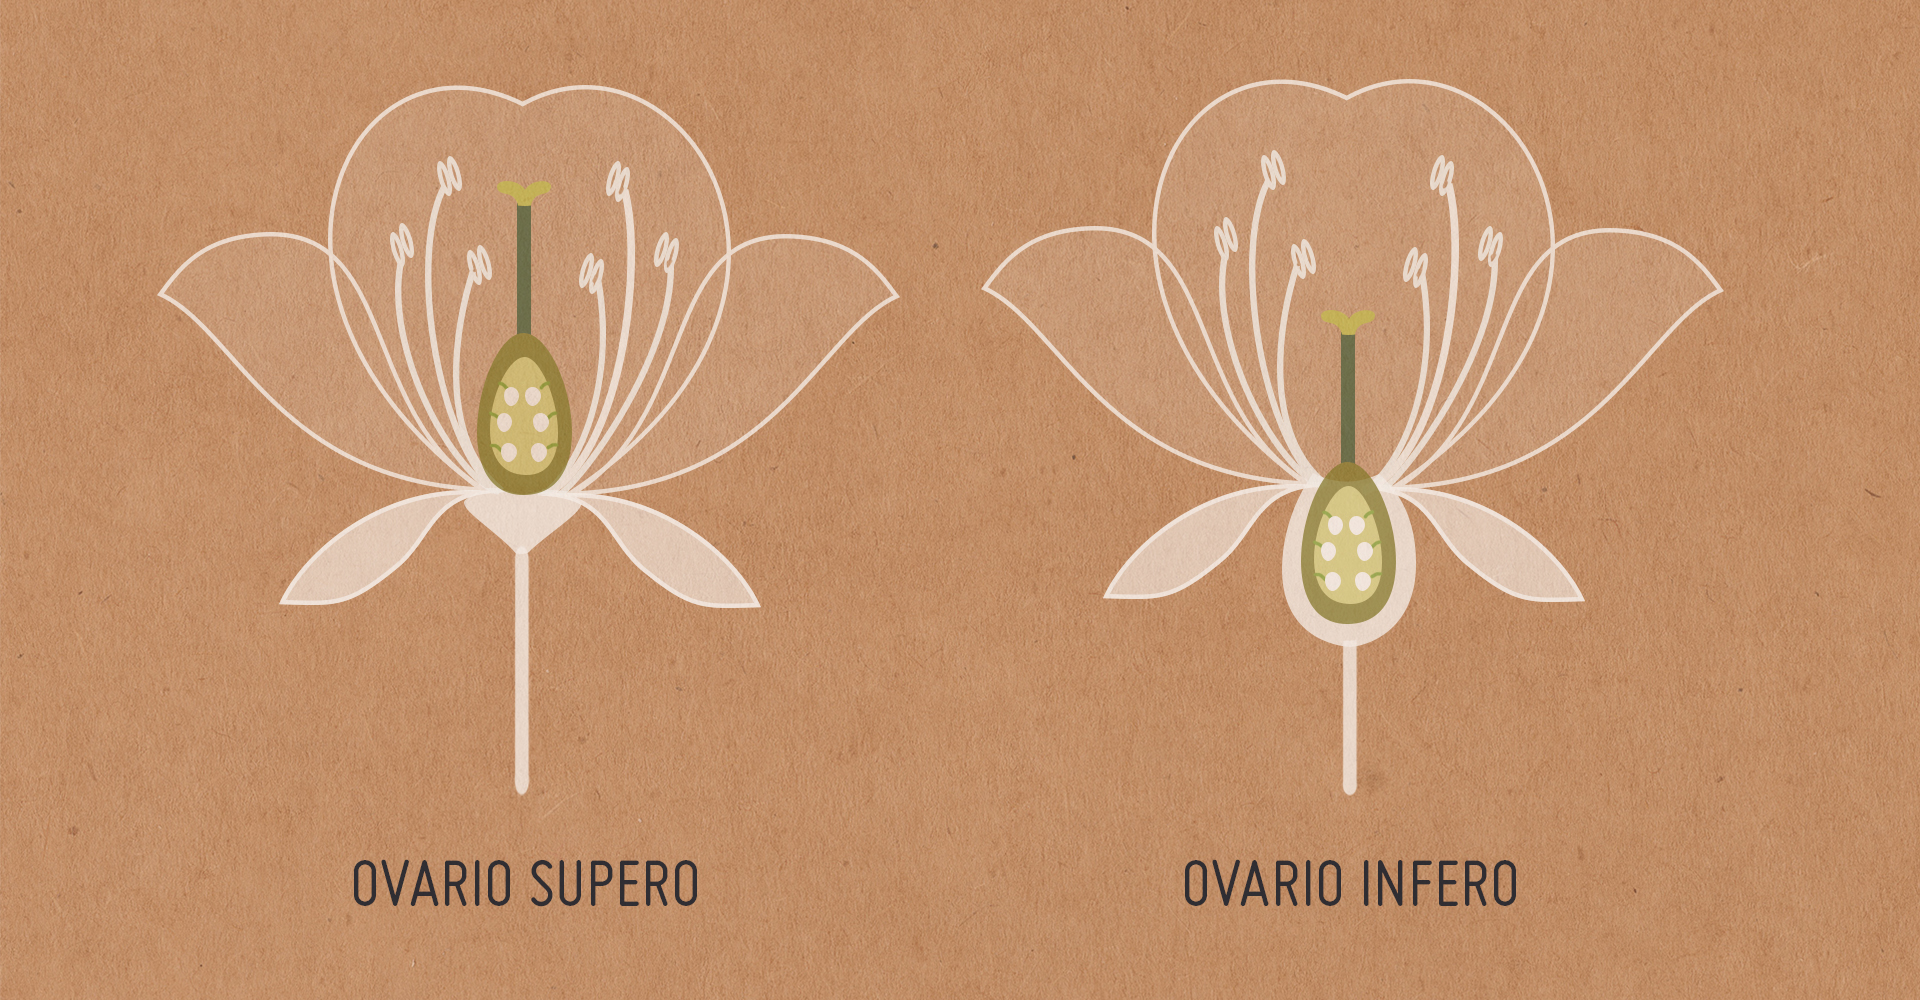 File:Ovario infero e ovario supero.jpg - Wikimedia Commons